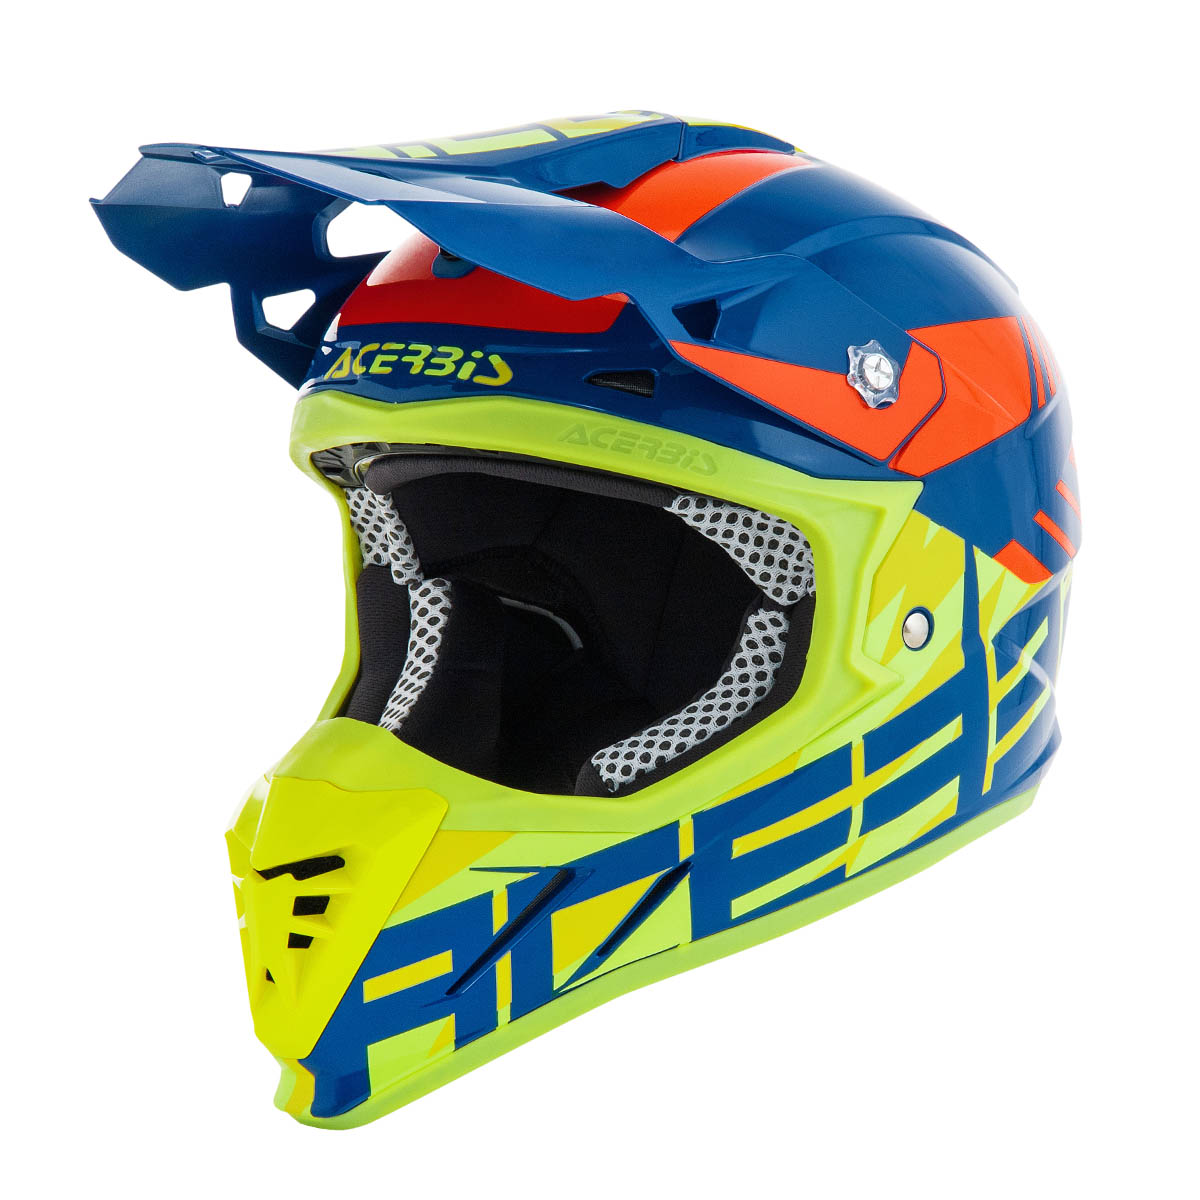 Acerbis Helmet Profile 3.0 S Blue/Fluo Yellow